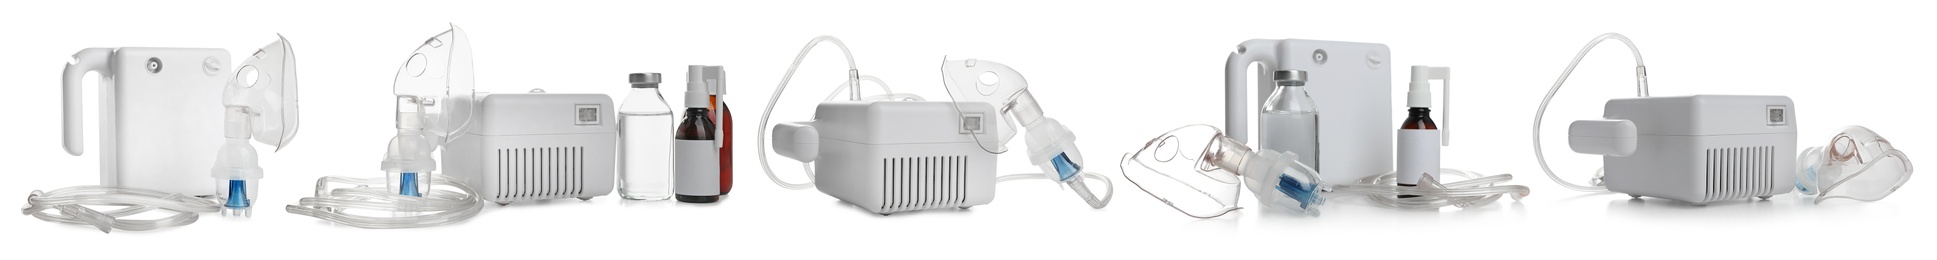 Image of Set of modern nebulizers on white background, banner design. Inhalation equipment